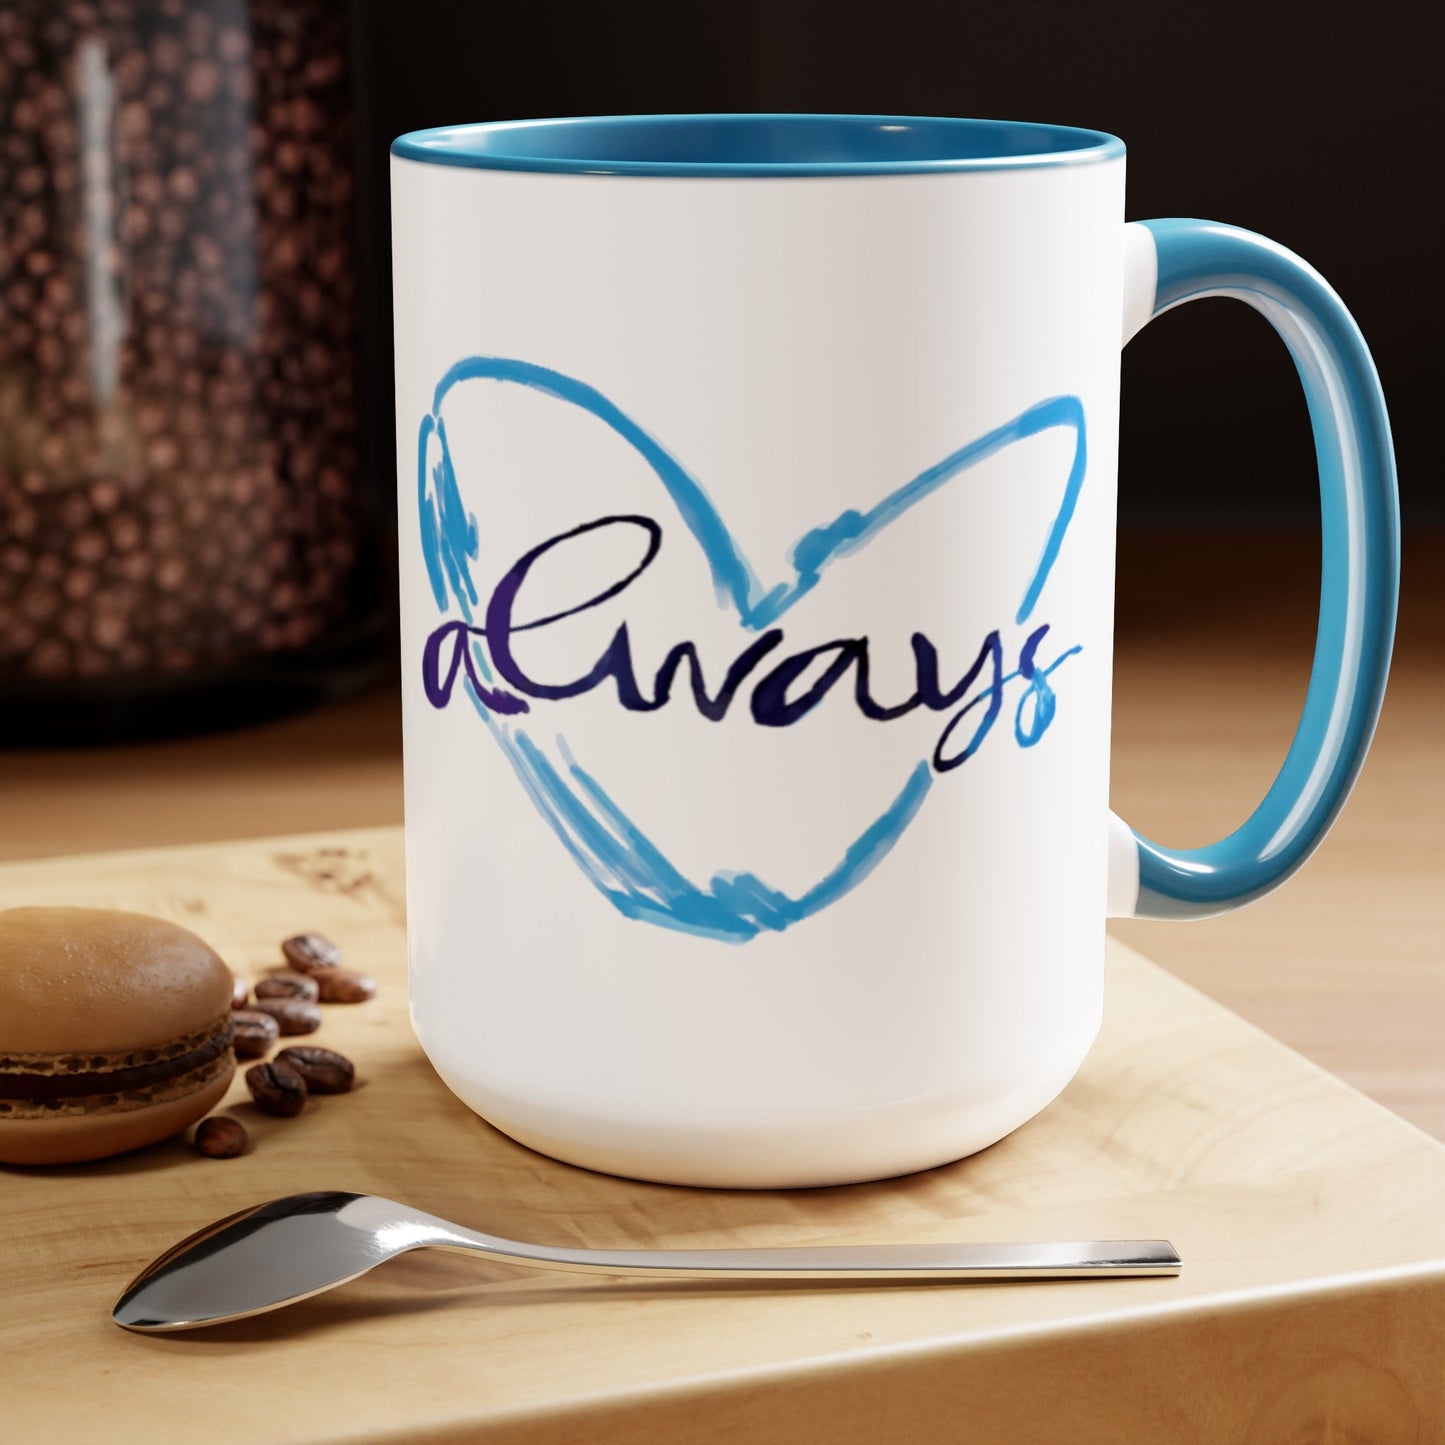 Always Heart Two-Tone Coffee Mugs, 15oz - Blue Cava